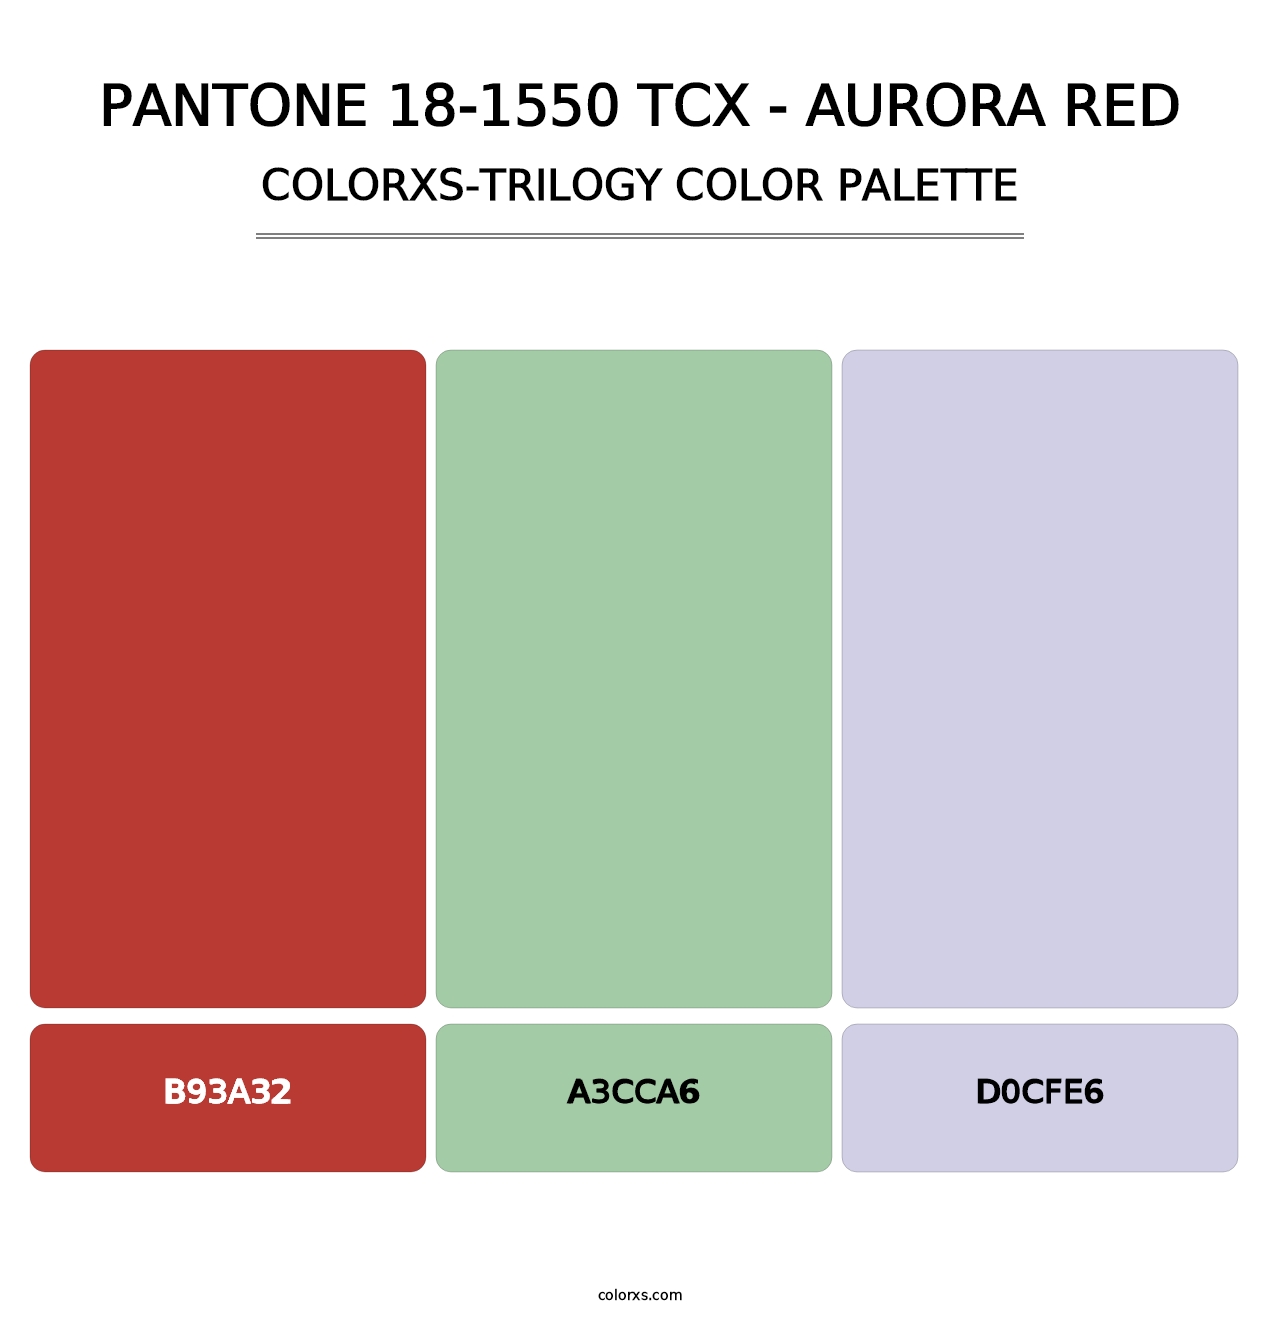 PANTONE 18-1550 TCX - Aurora Red - Colorxs Trilogy Palette